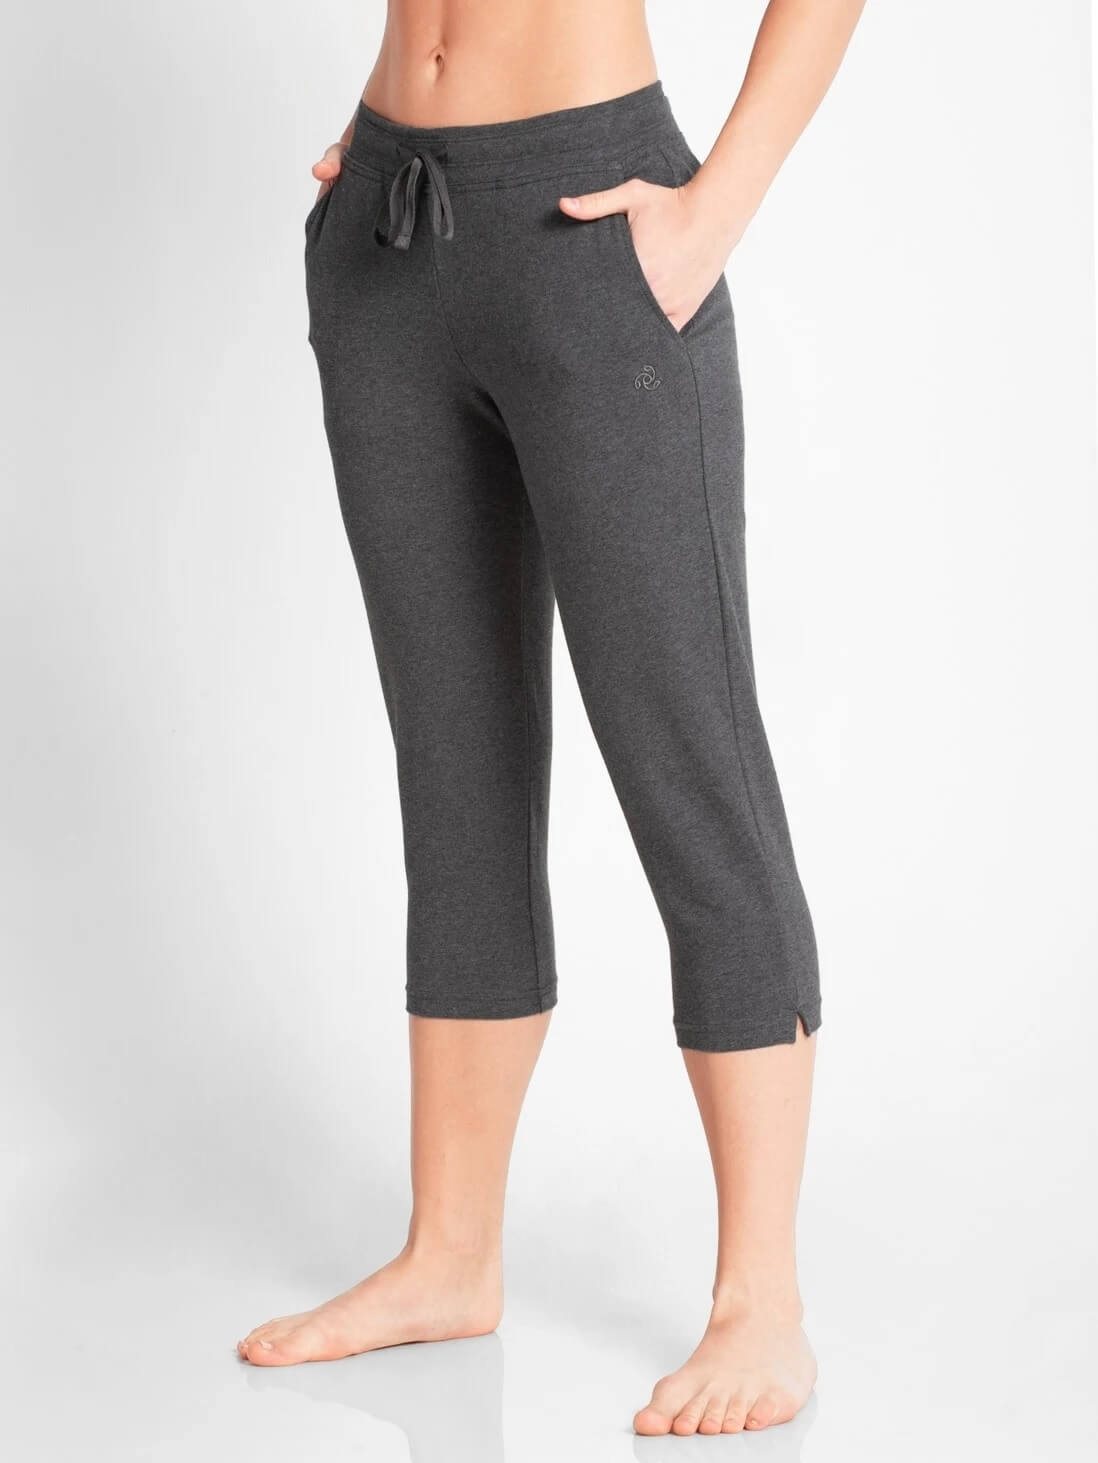 Jockey Charcoal Melange Capri Pants for Women #1300 [New Fit]